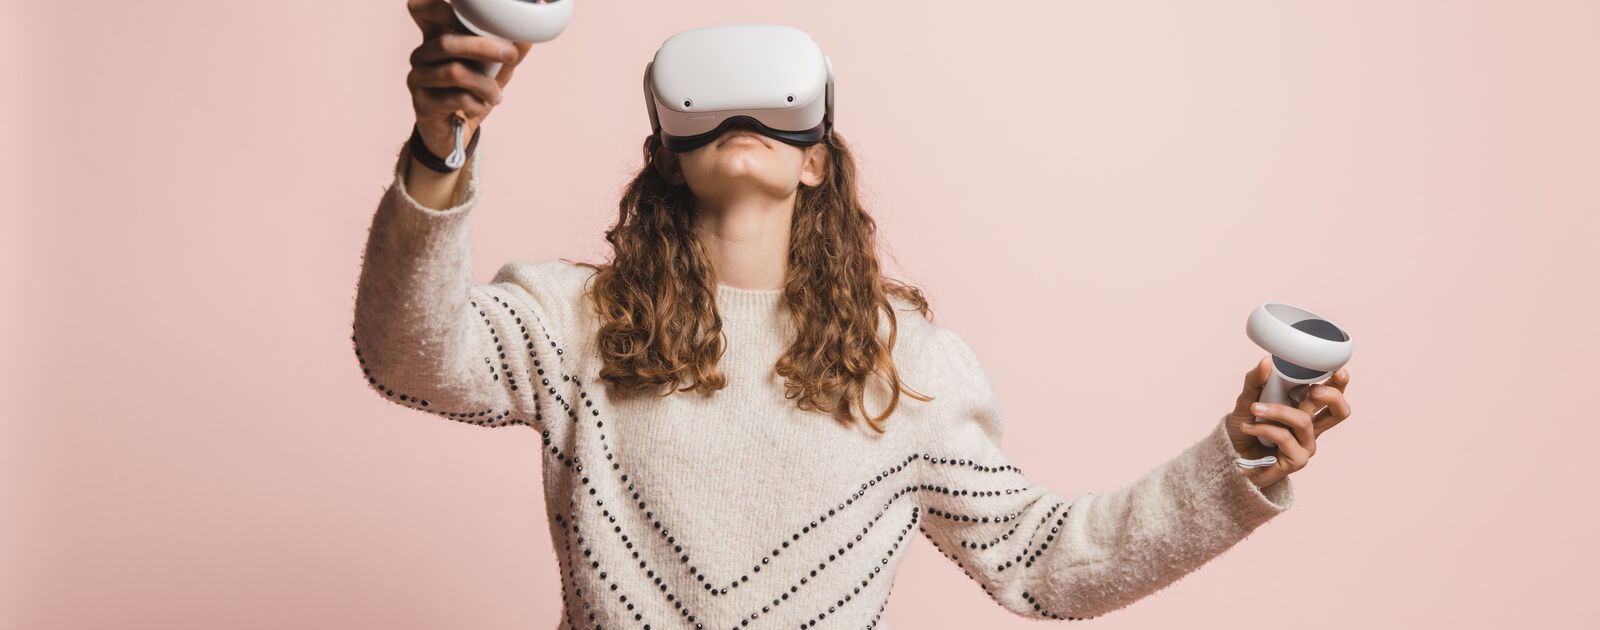 workshop virtual reality - meisje met vr bril en controllers in de hand